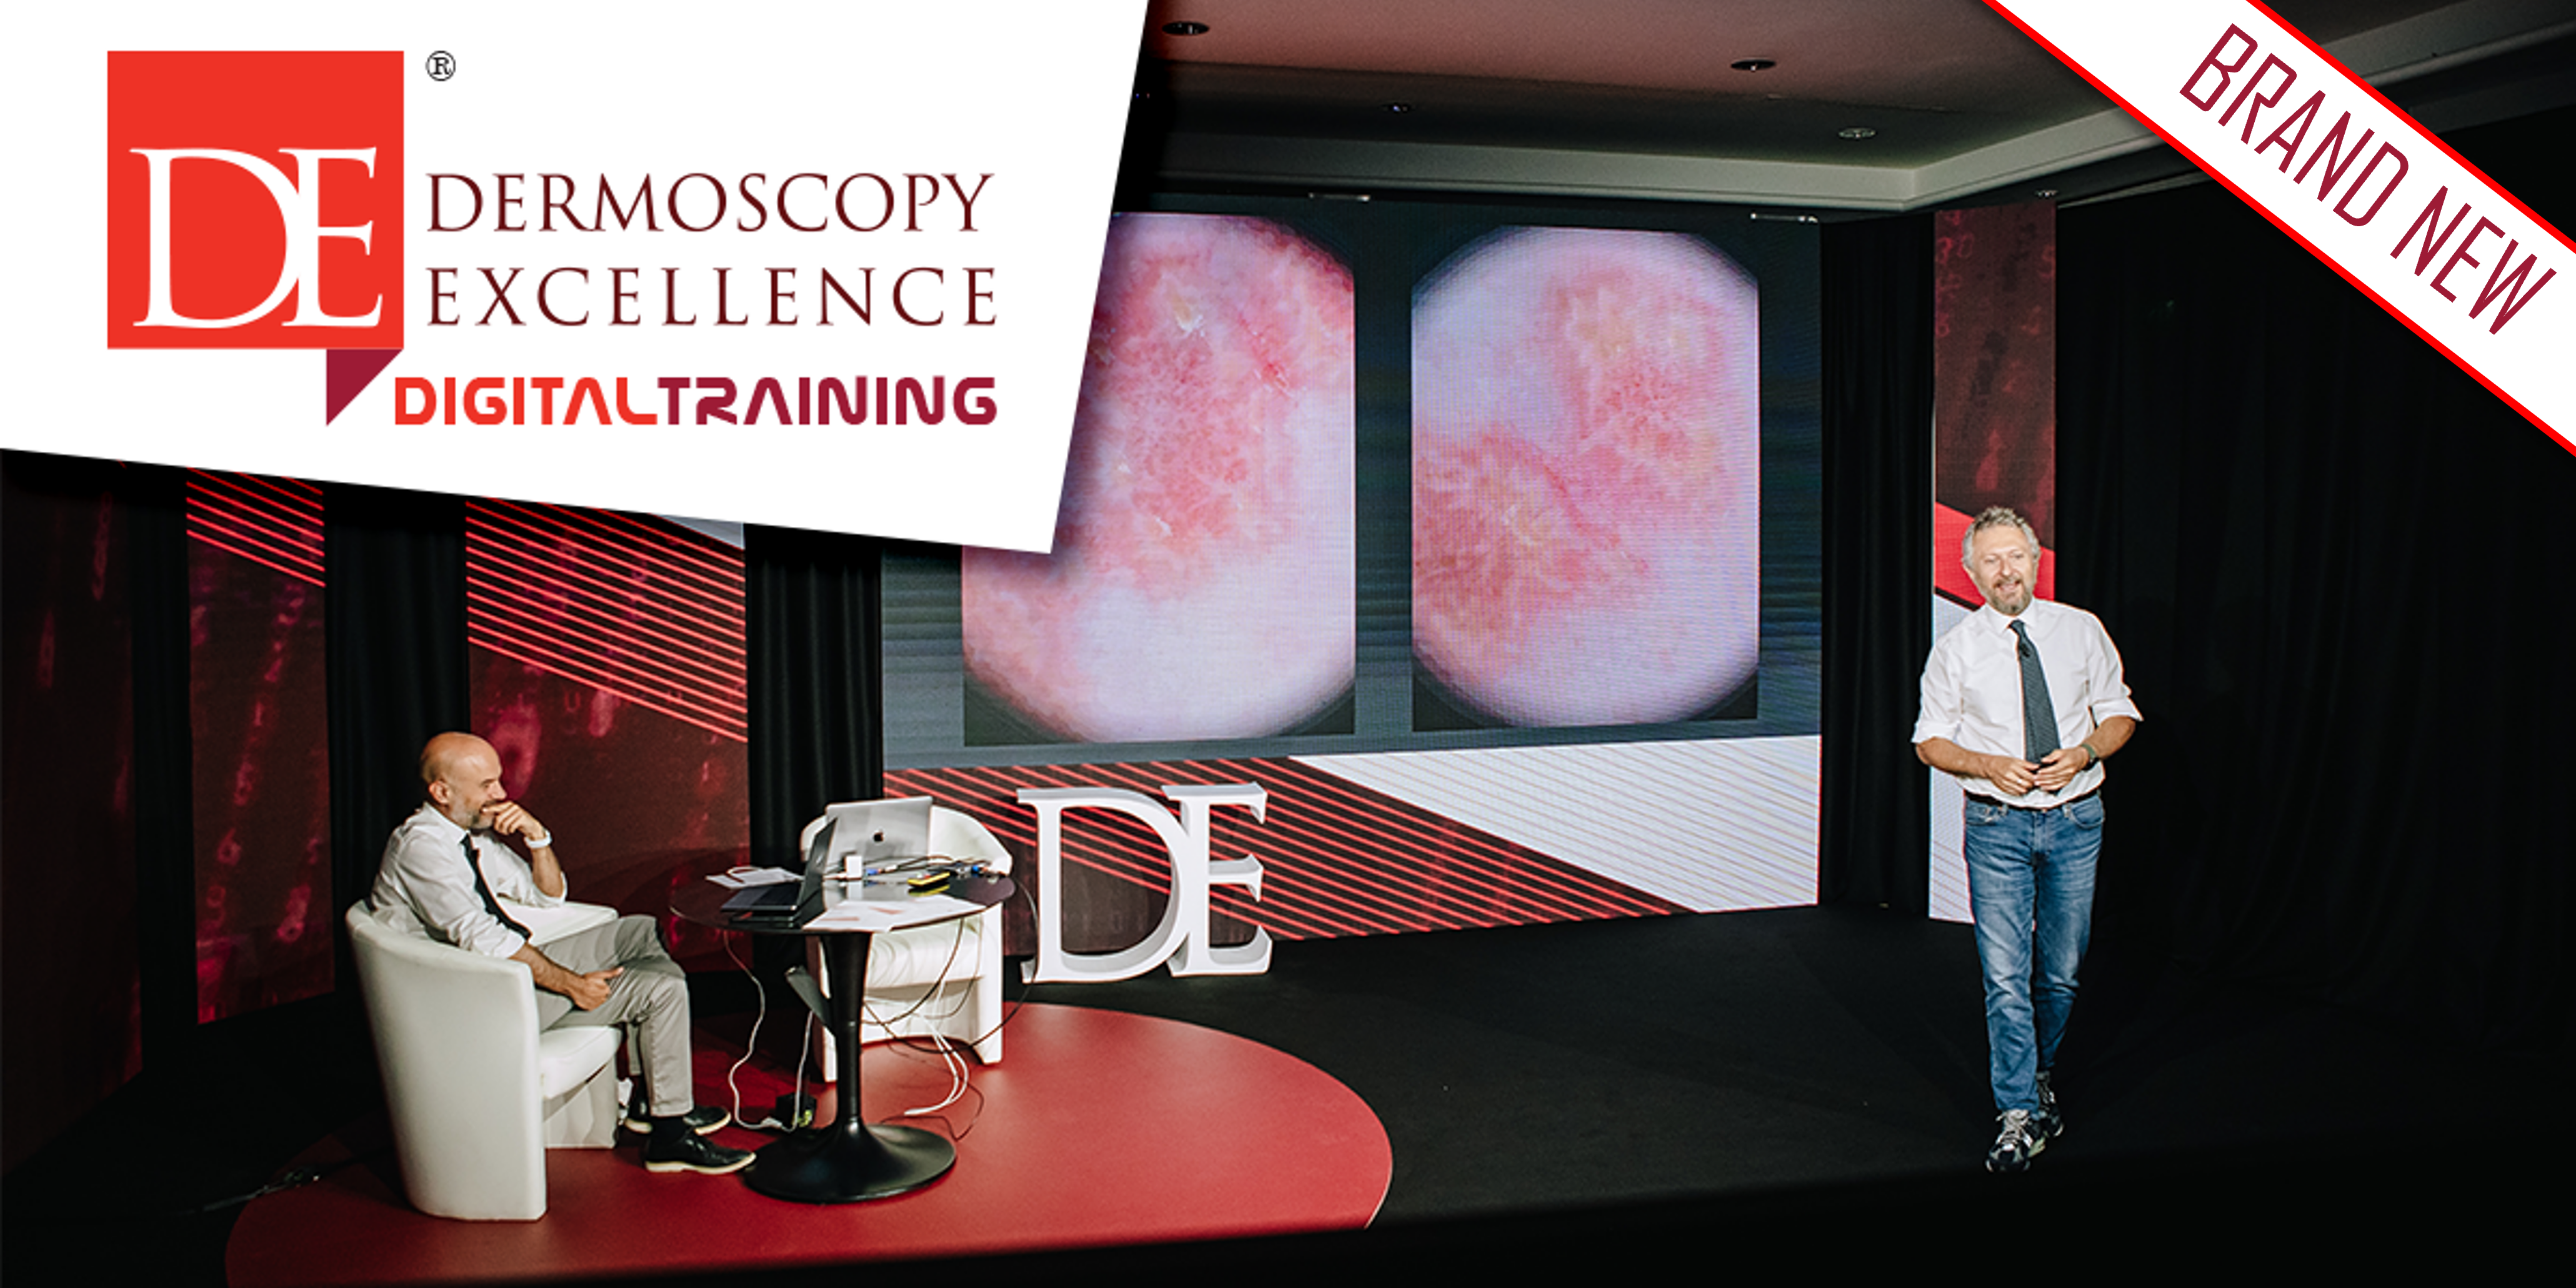 Dermoscopy Excellence Digital Training more info